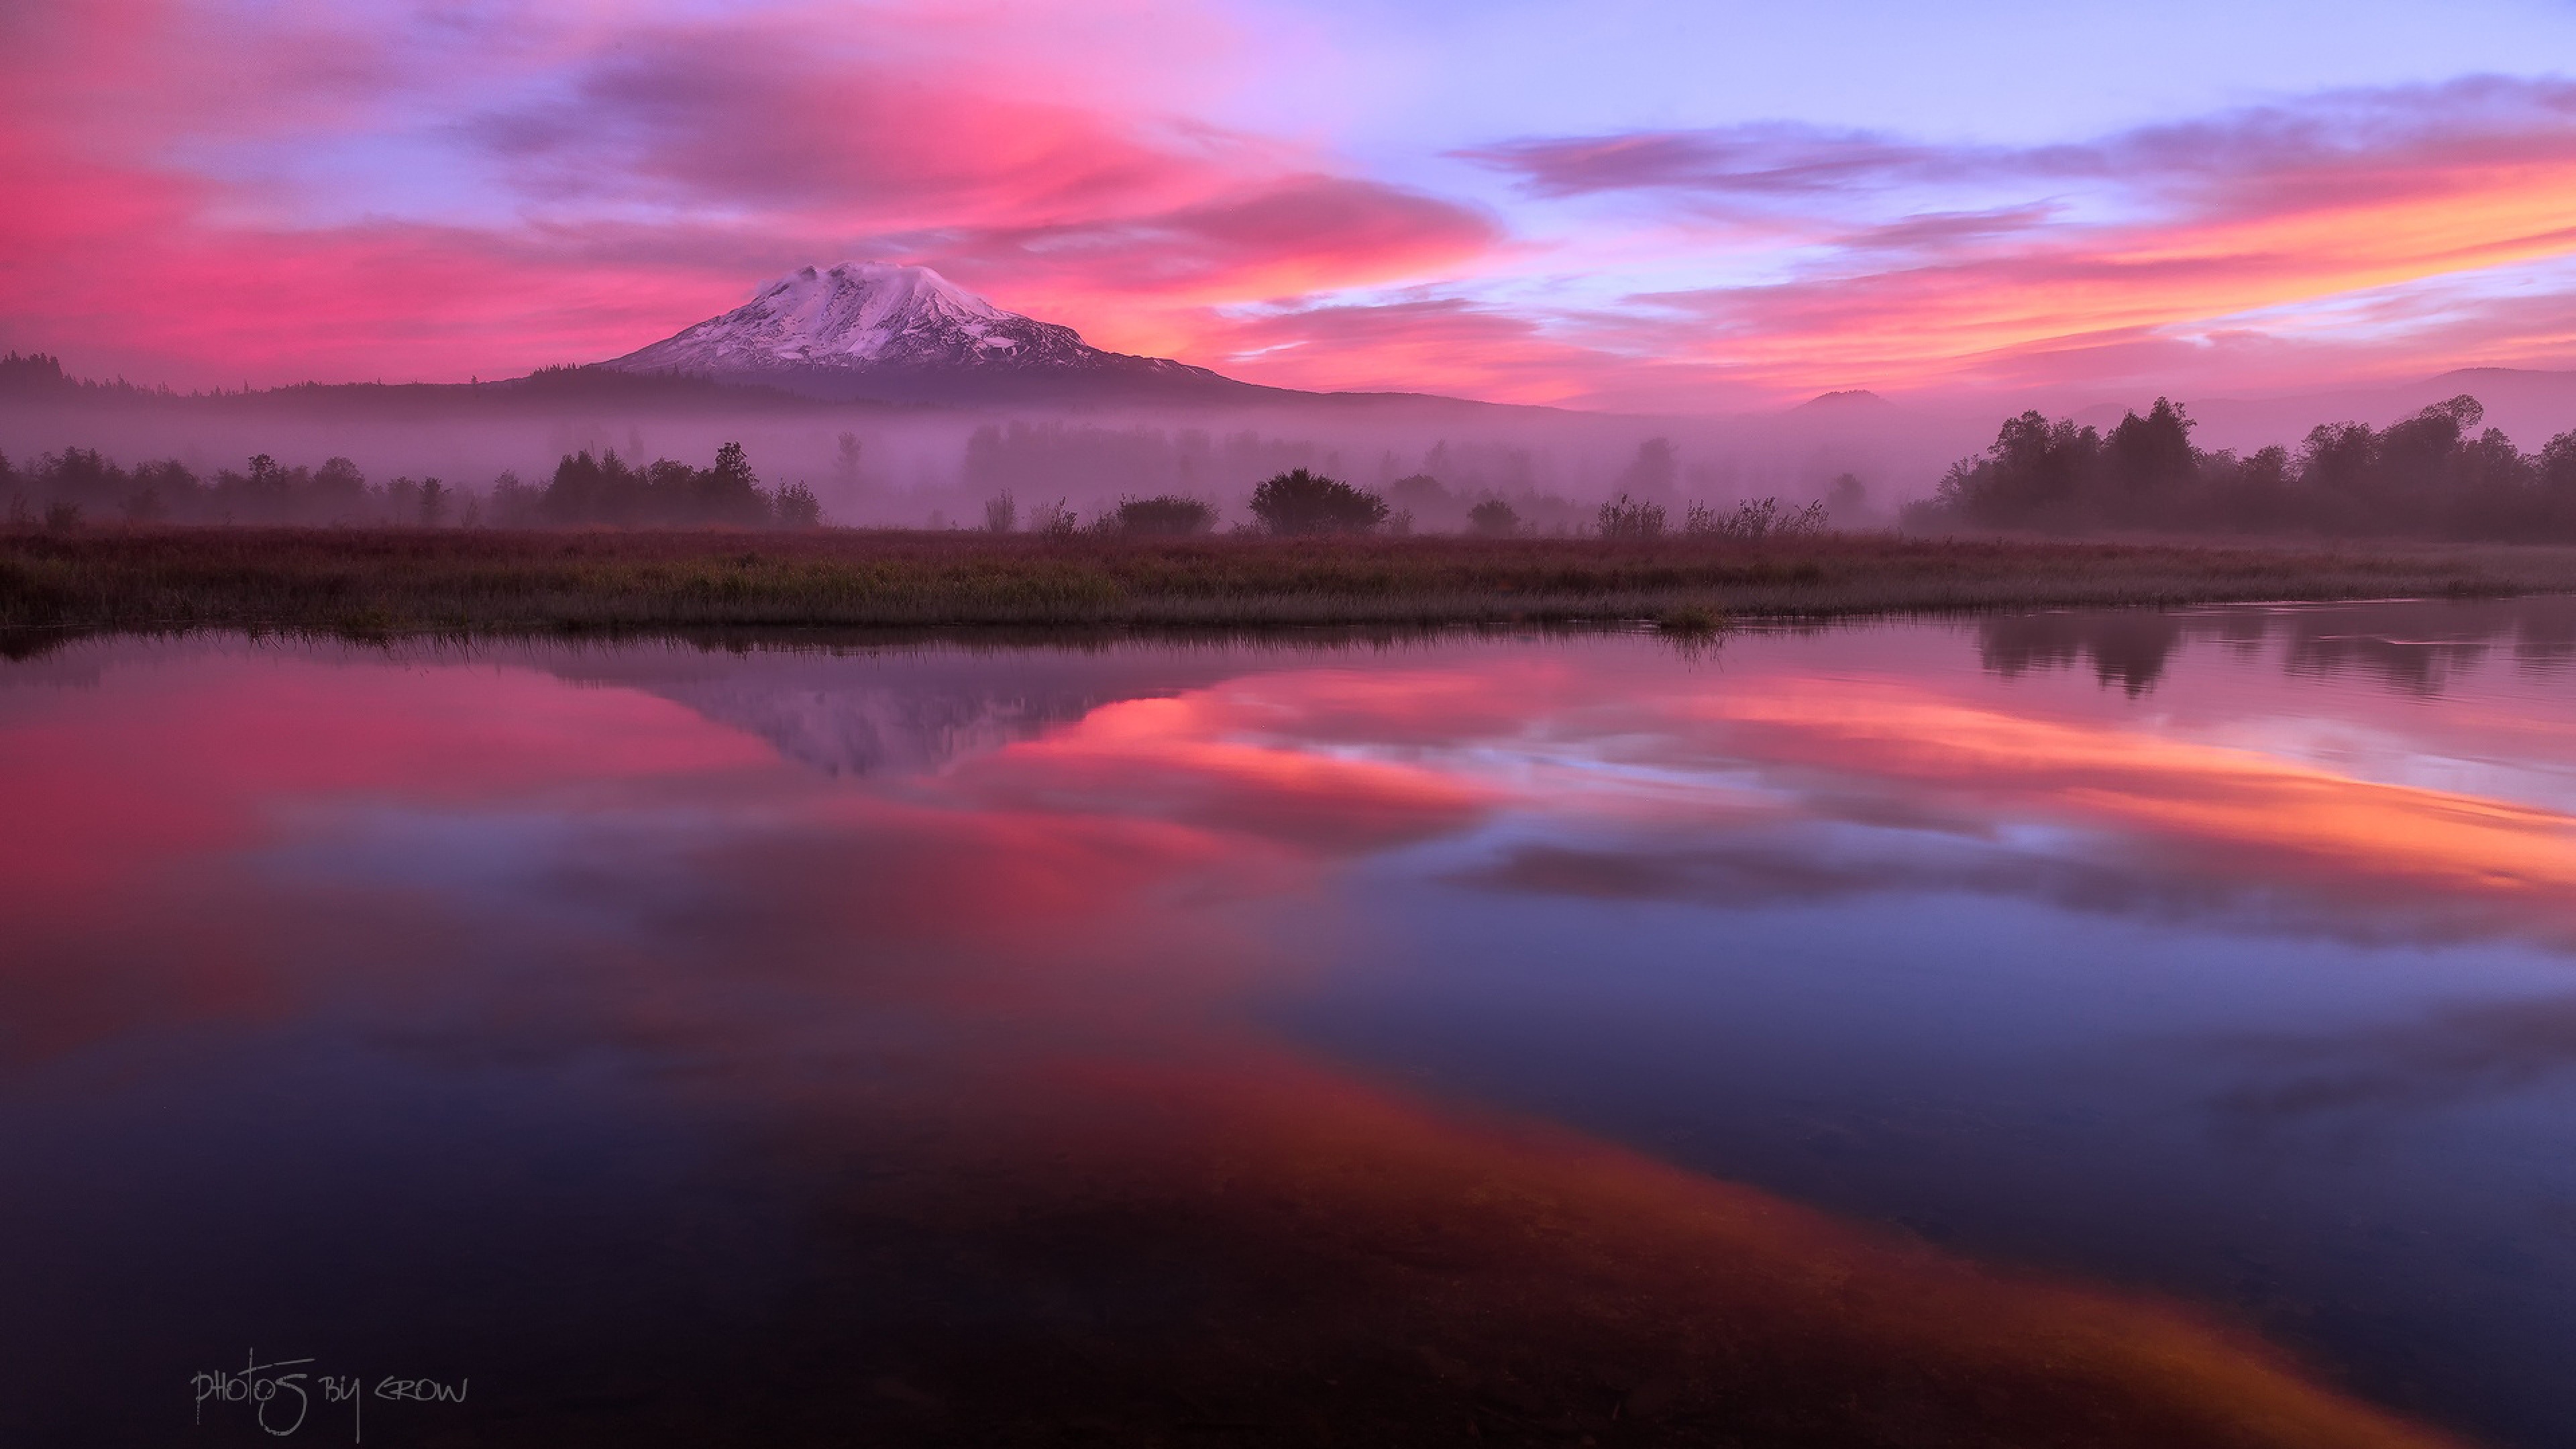 Washington's volcanic beauty, Nature's fury unleashed, Stunning 4k wallpapers, Breathtaking scenery, 3840x2160 4K Desktop